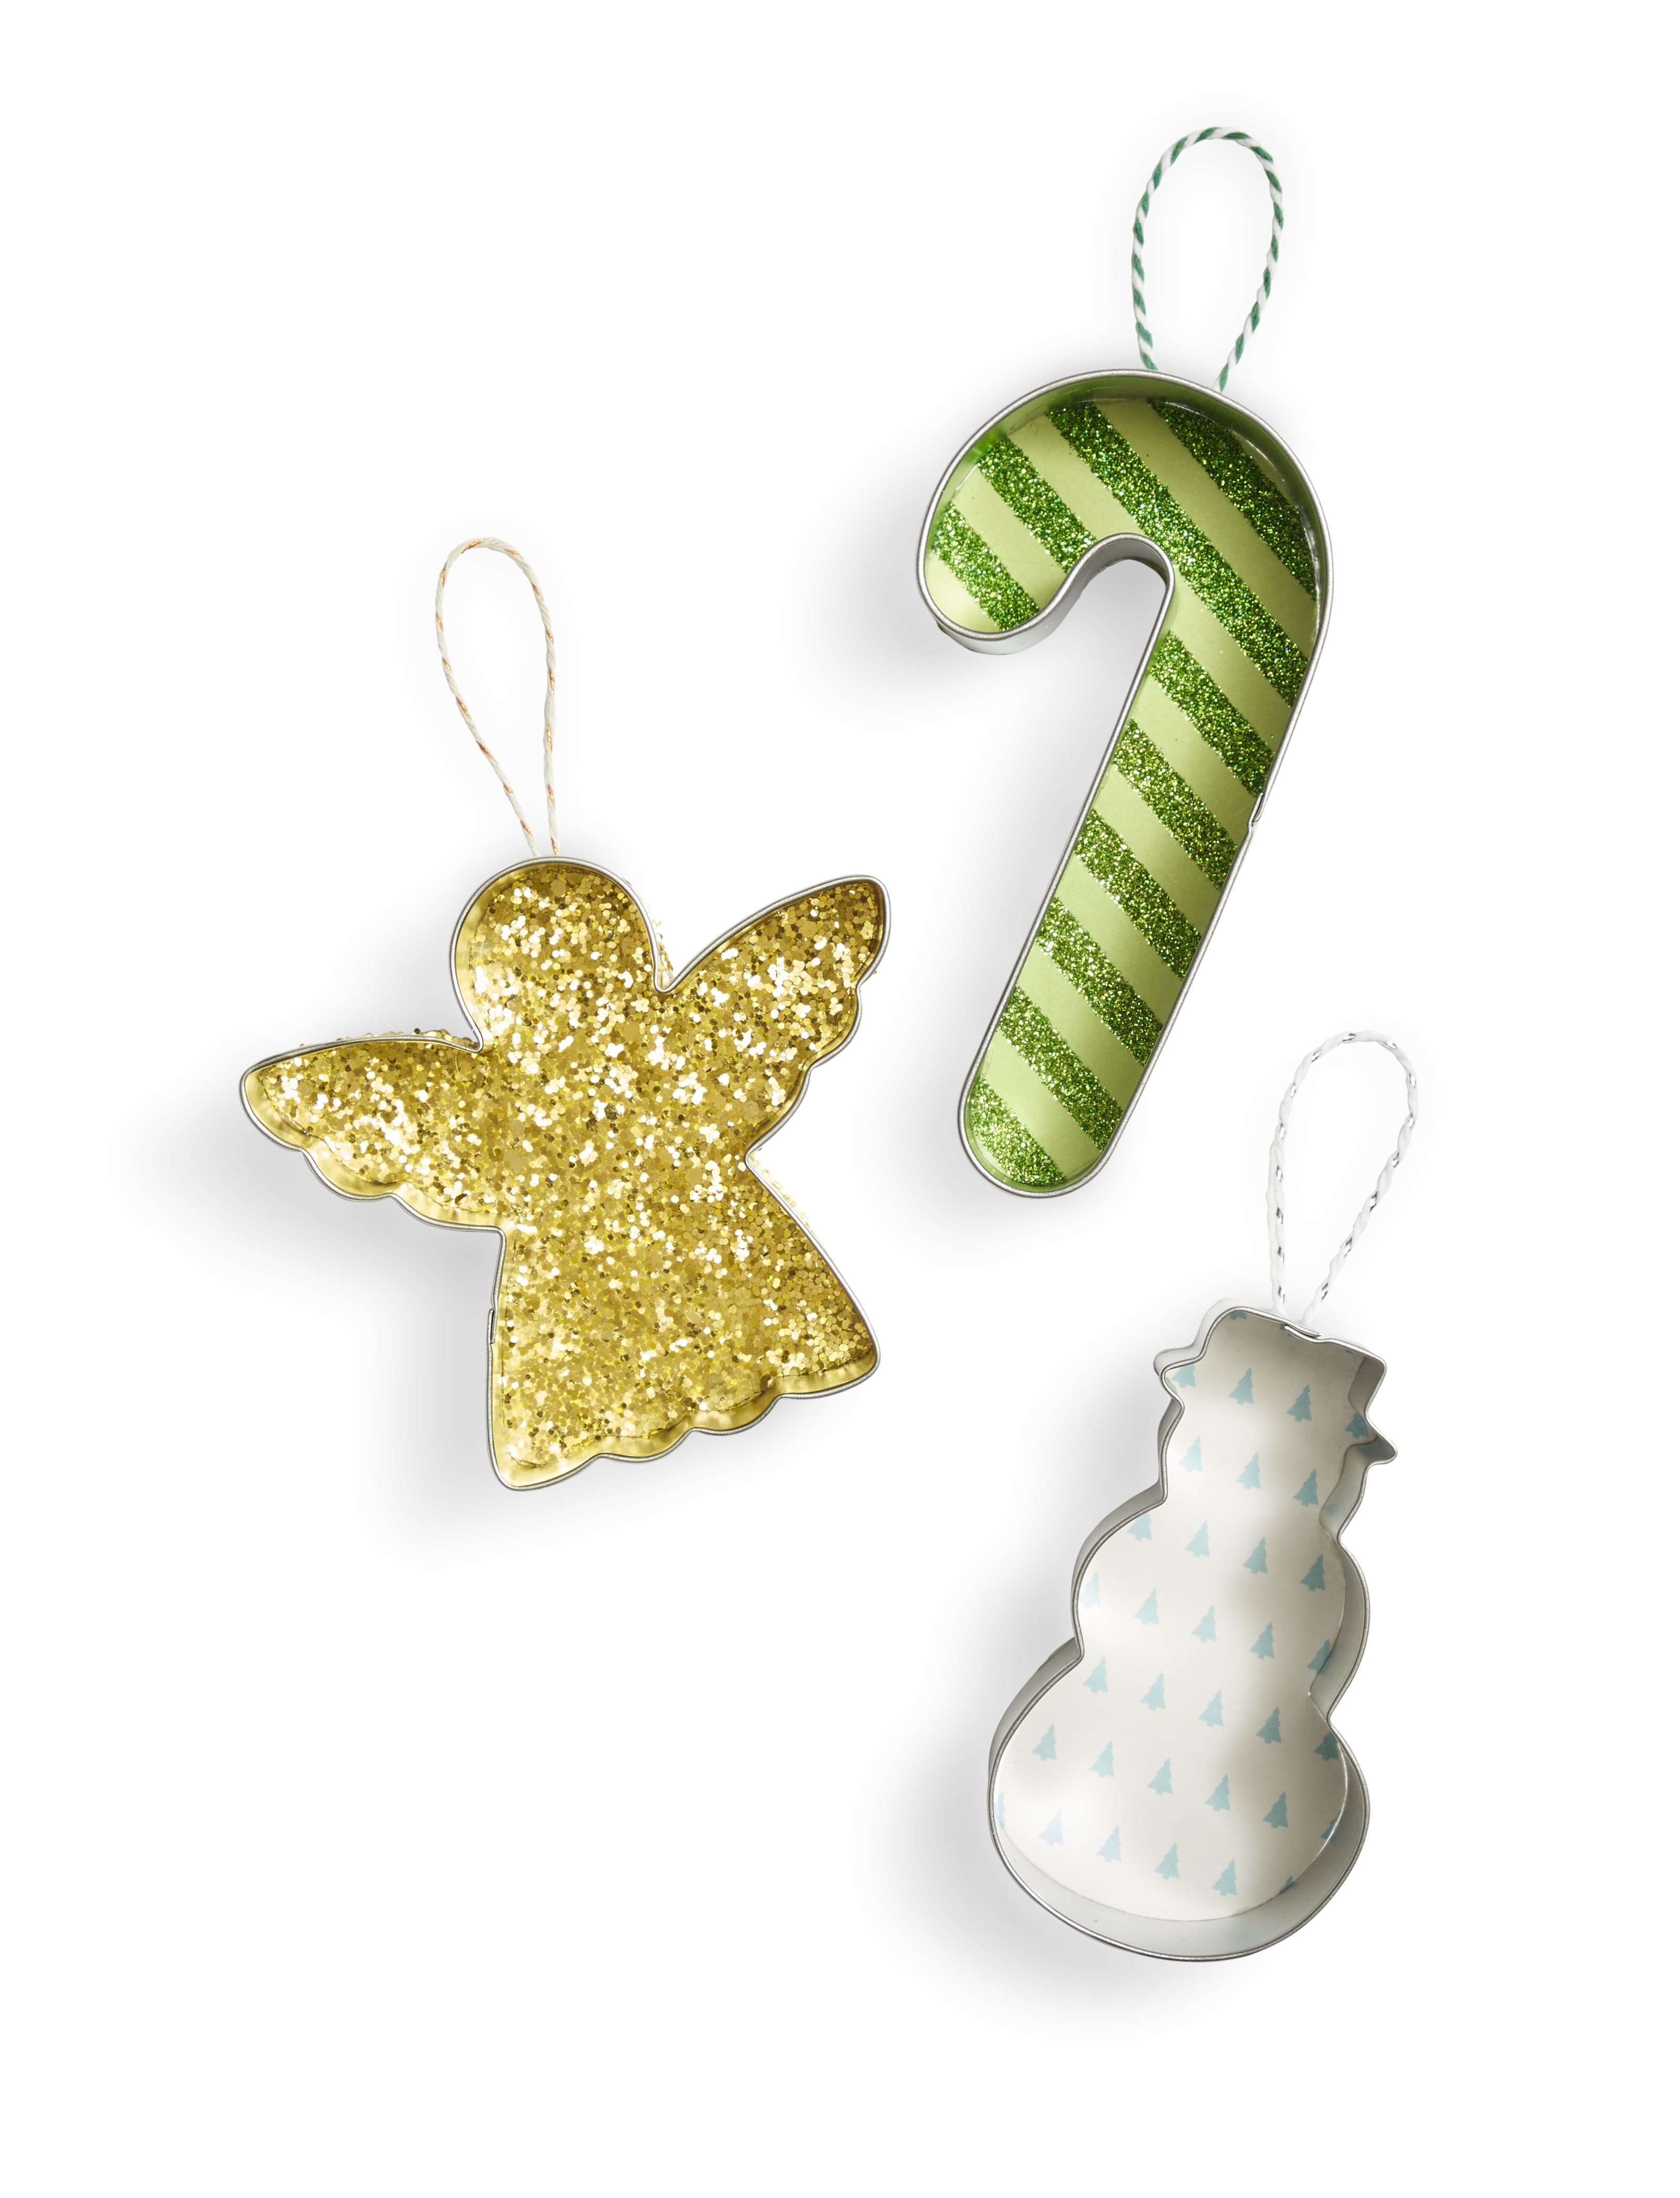 Details about  / NIB Creative Hands Foam stars and bulbs Christmas glitter ornaments Kit